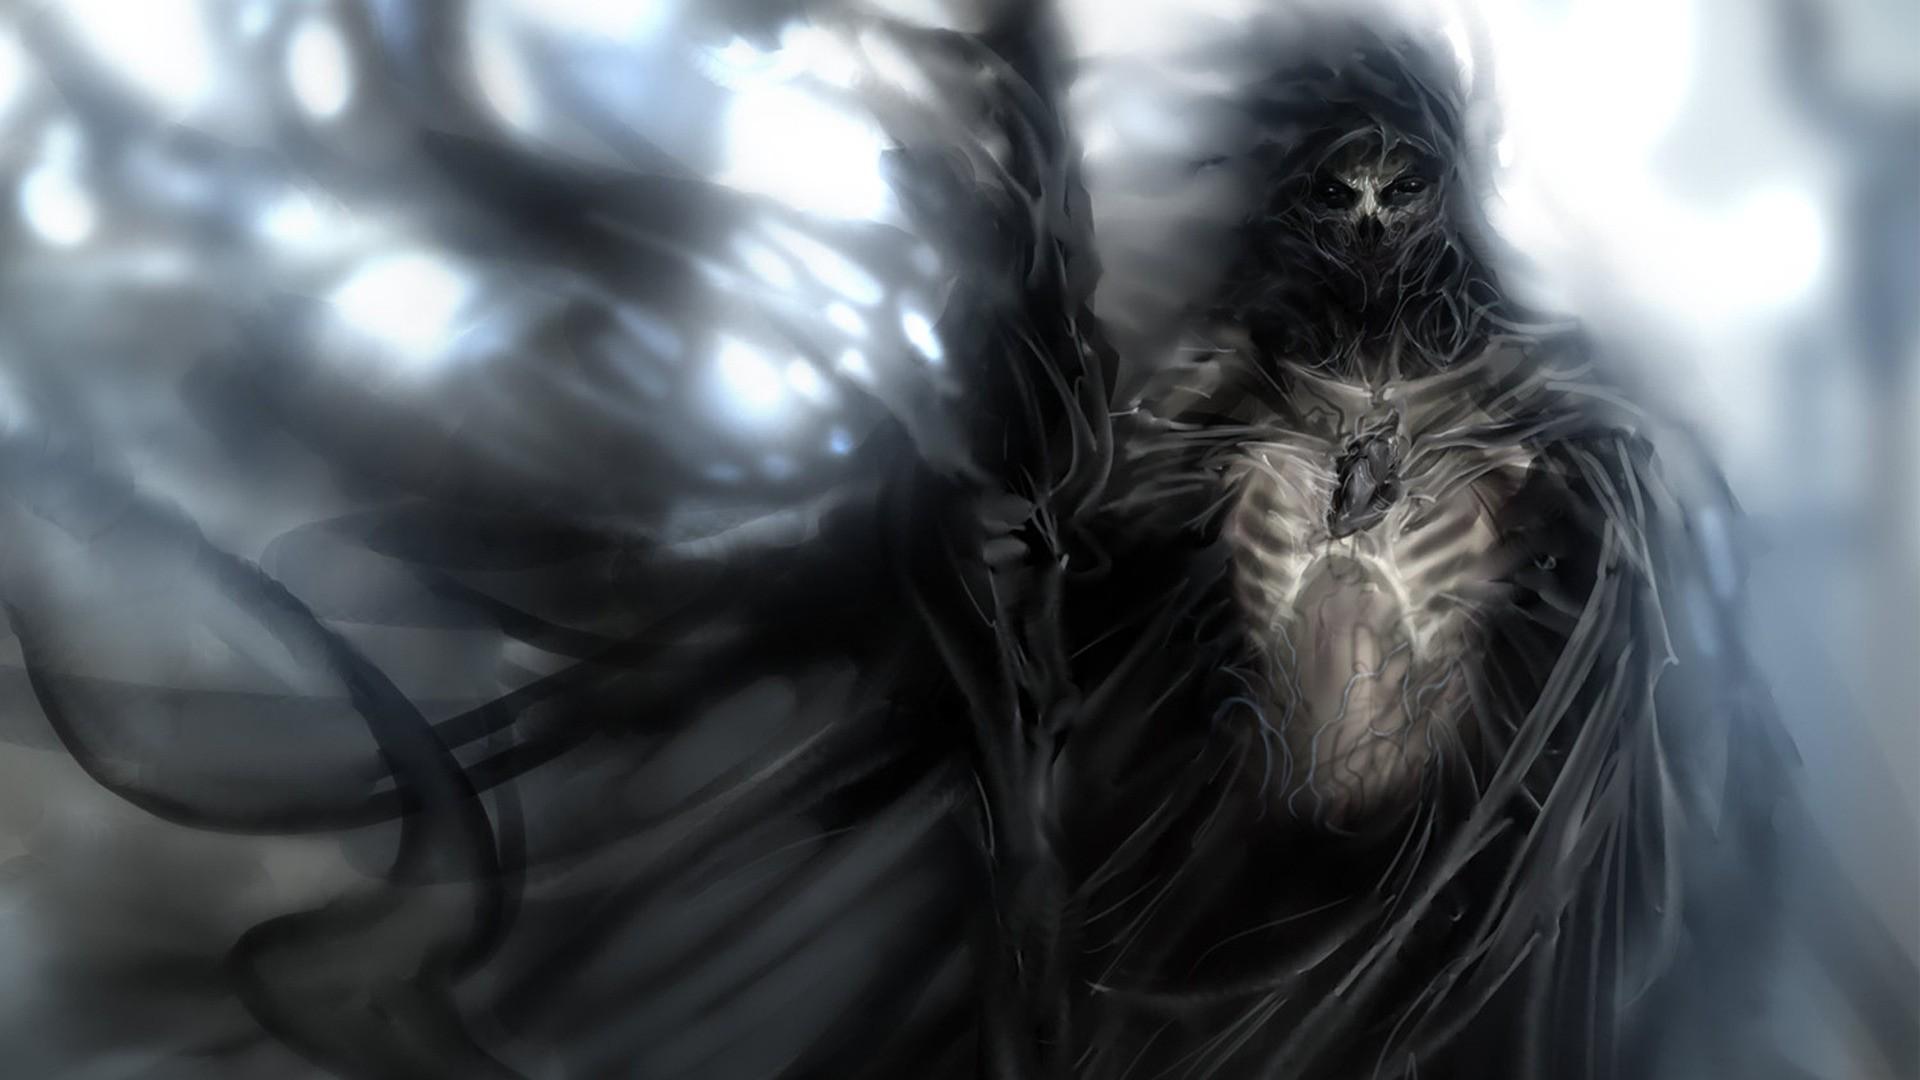 HD Wallpaper Desktop Widescreen Image Of Grim Reaper